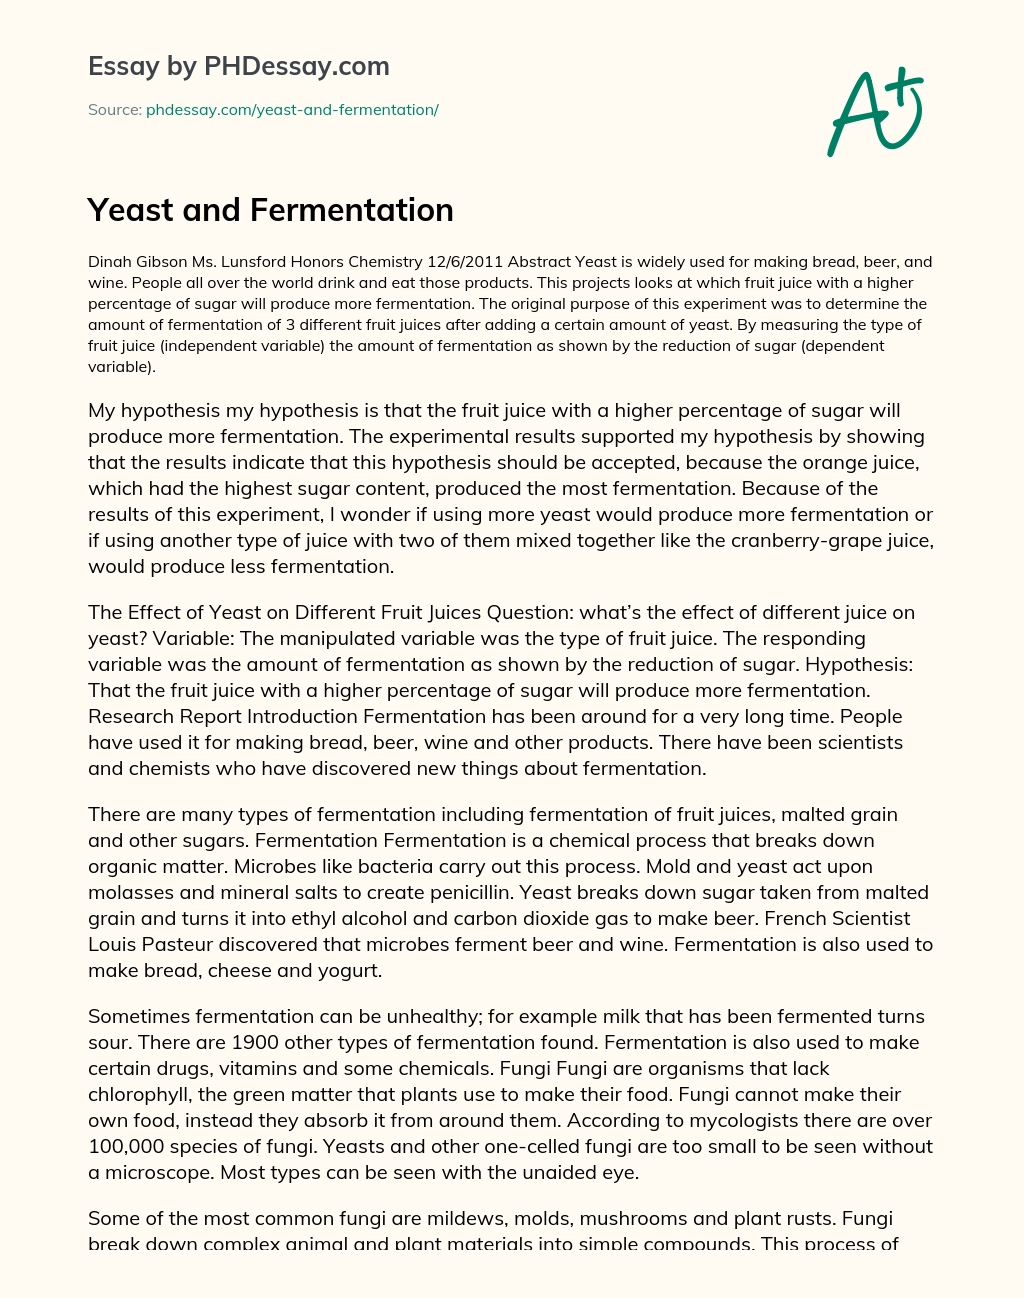 Yeast and Fermentation essay